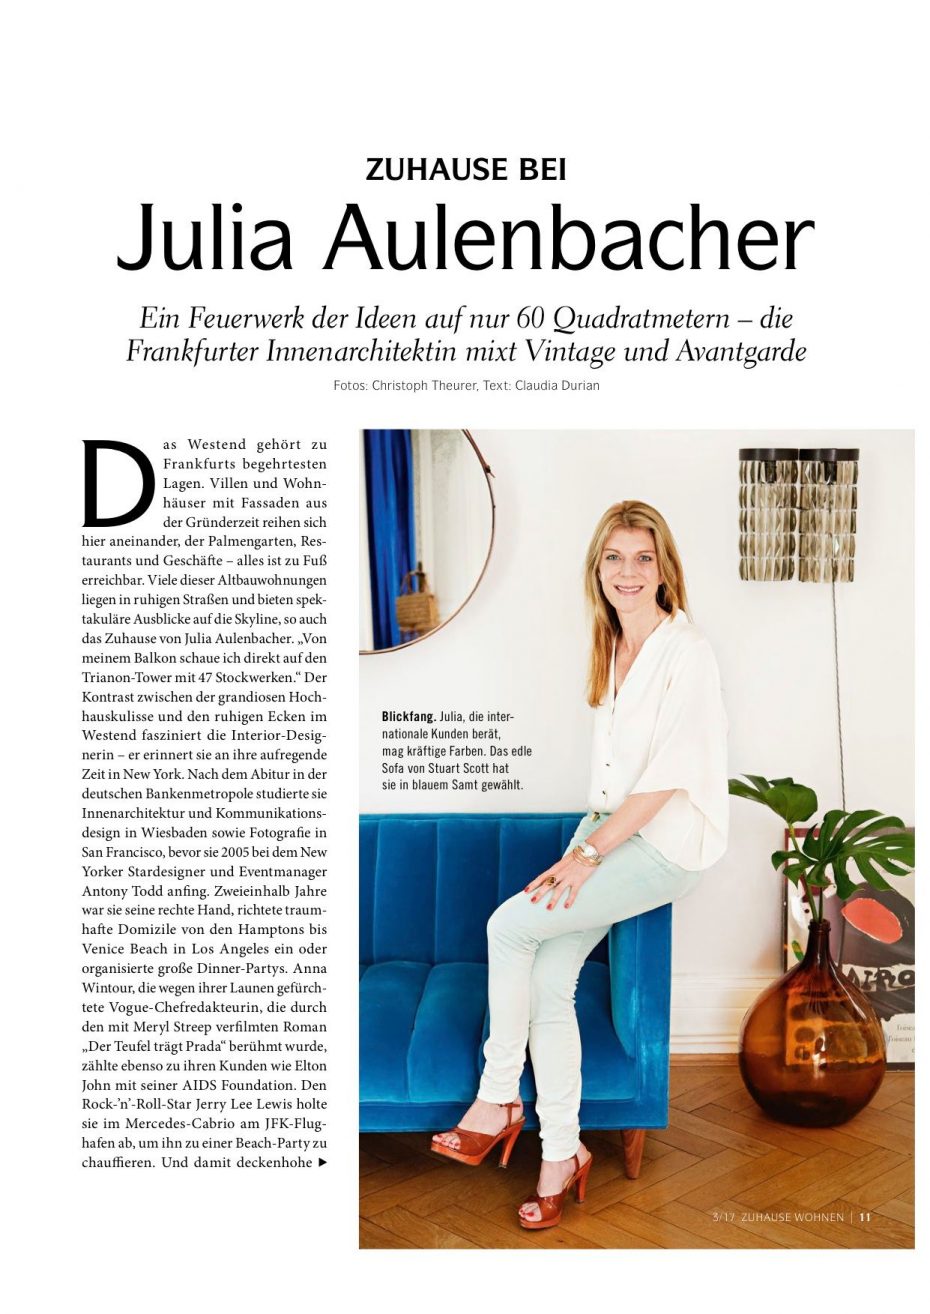 Julia Aulenbacher - Interiors +++ zu Hause wohnen 1